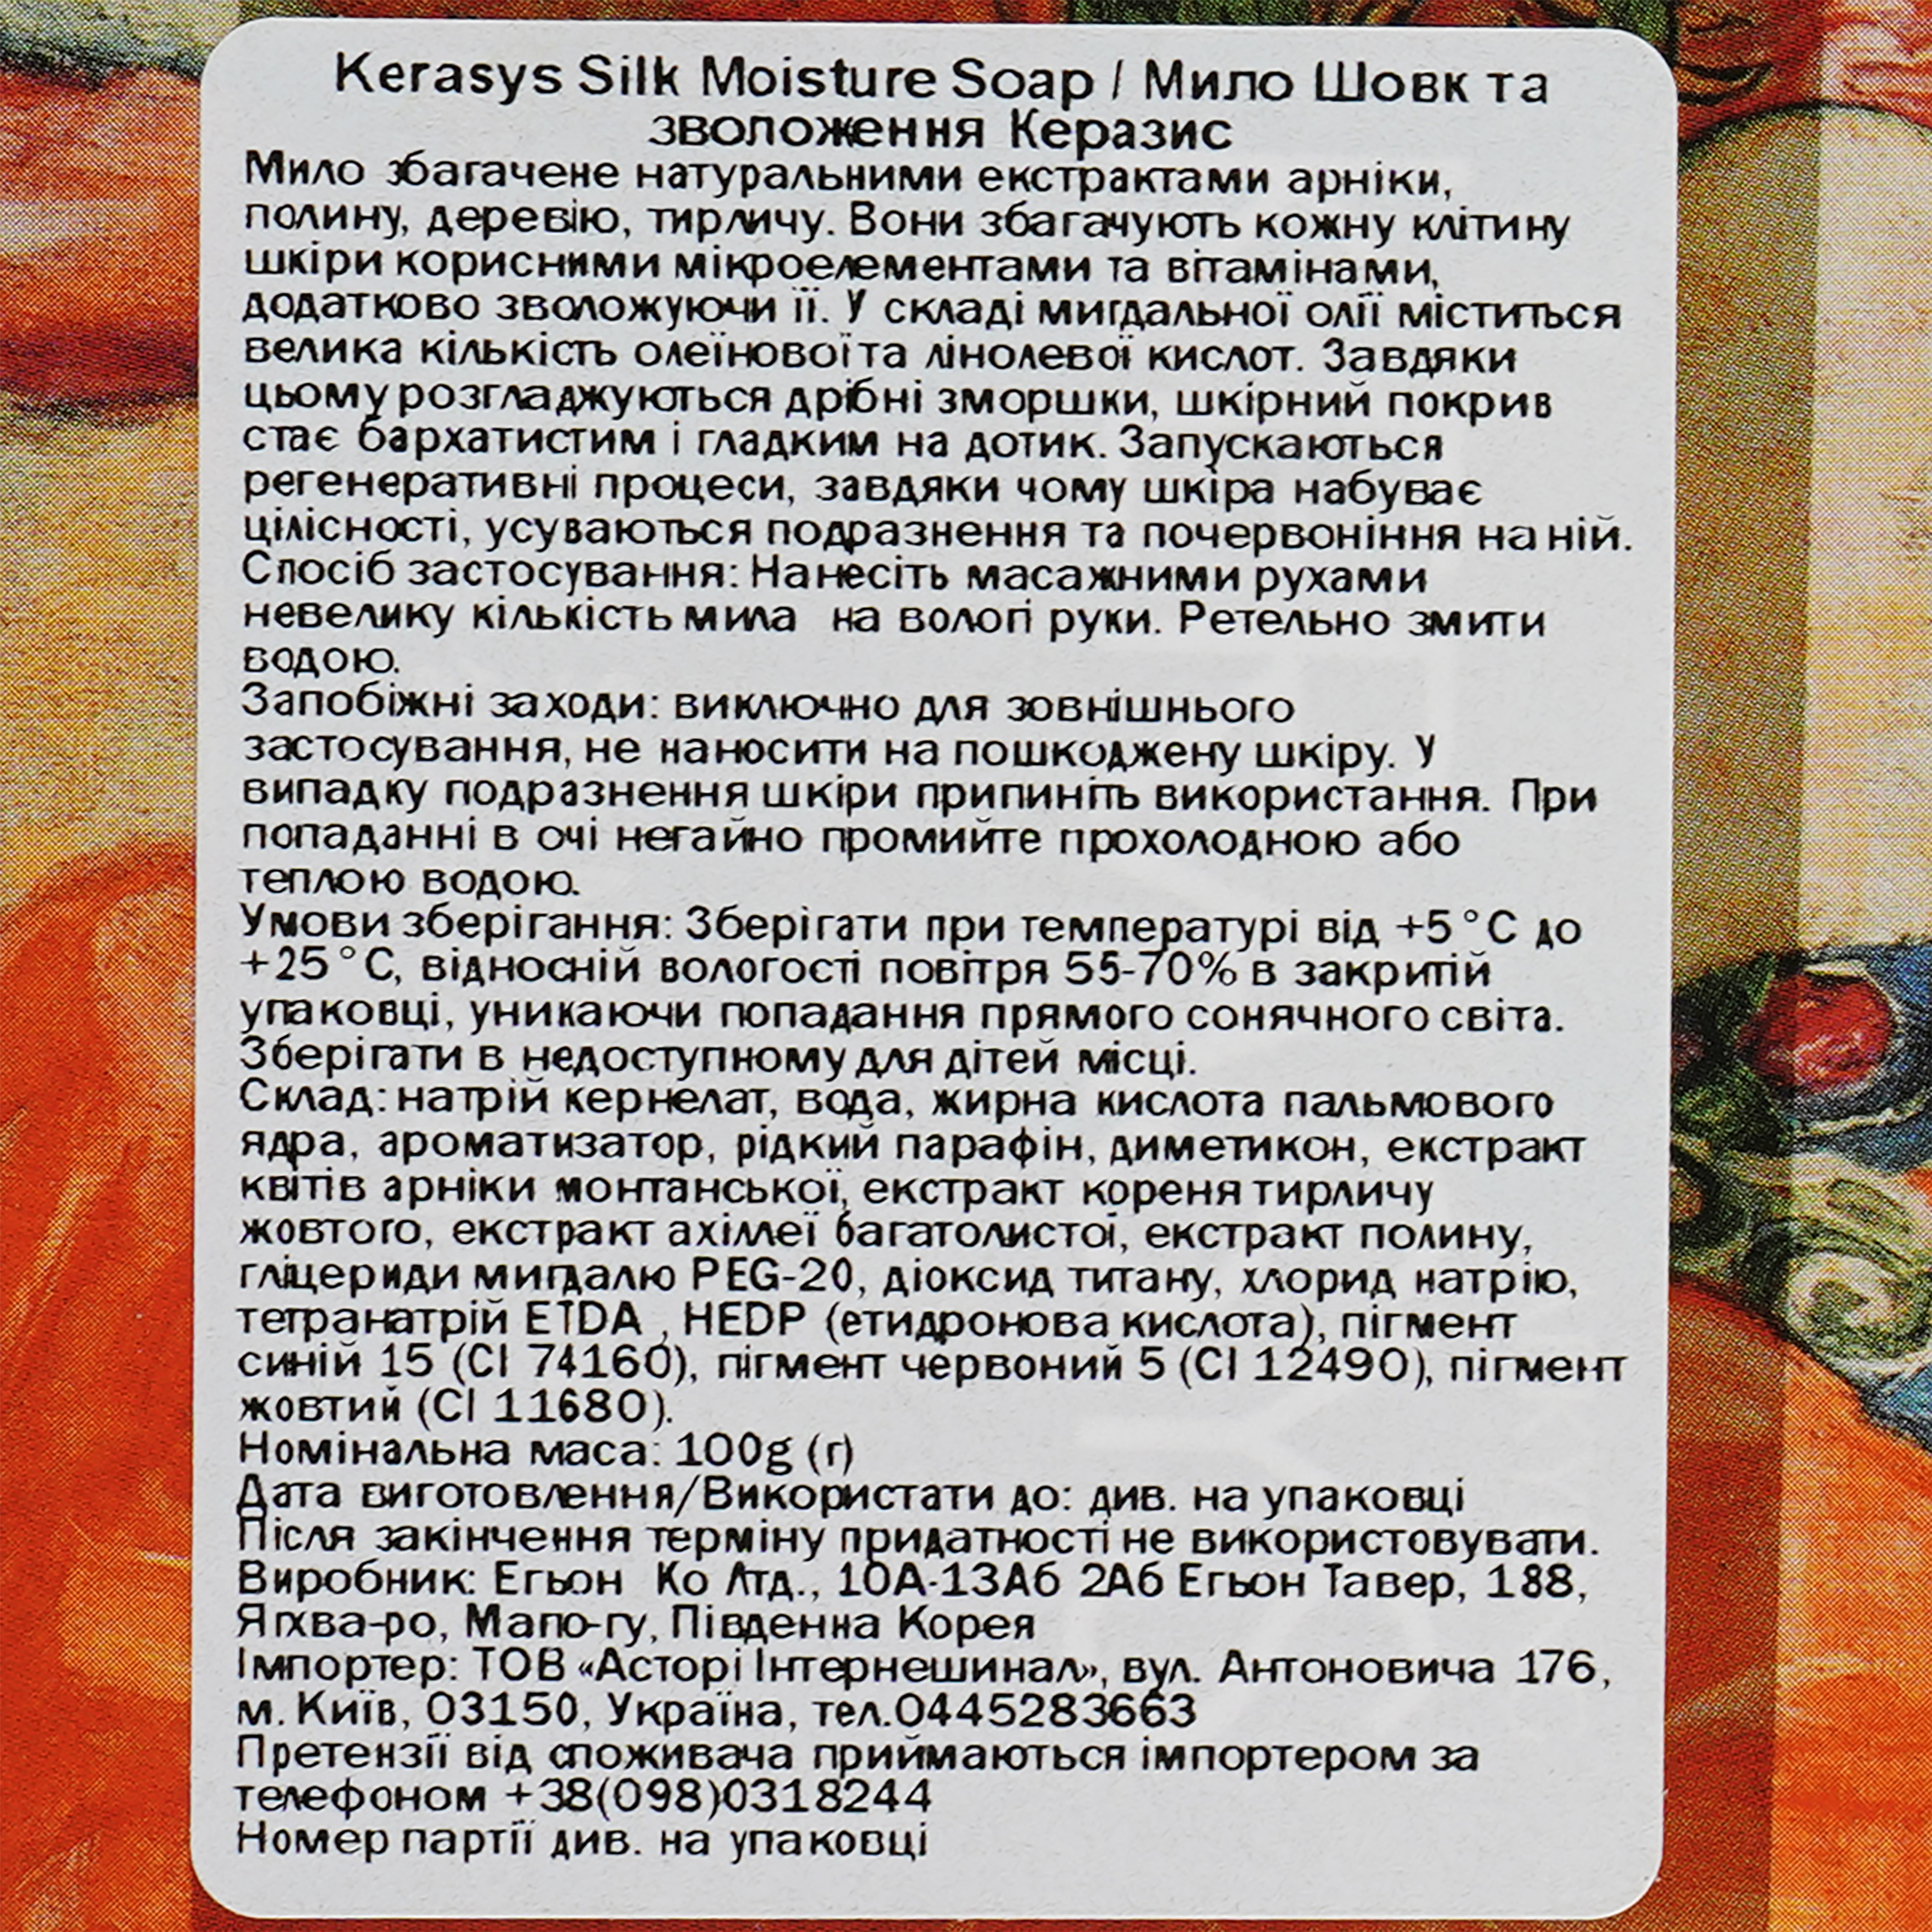 Мыло Kerasys Silk Moisture Soap, 100 г - фото 4